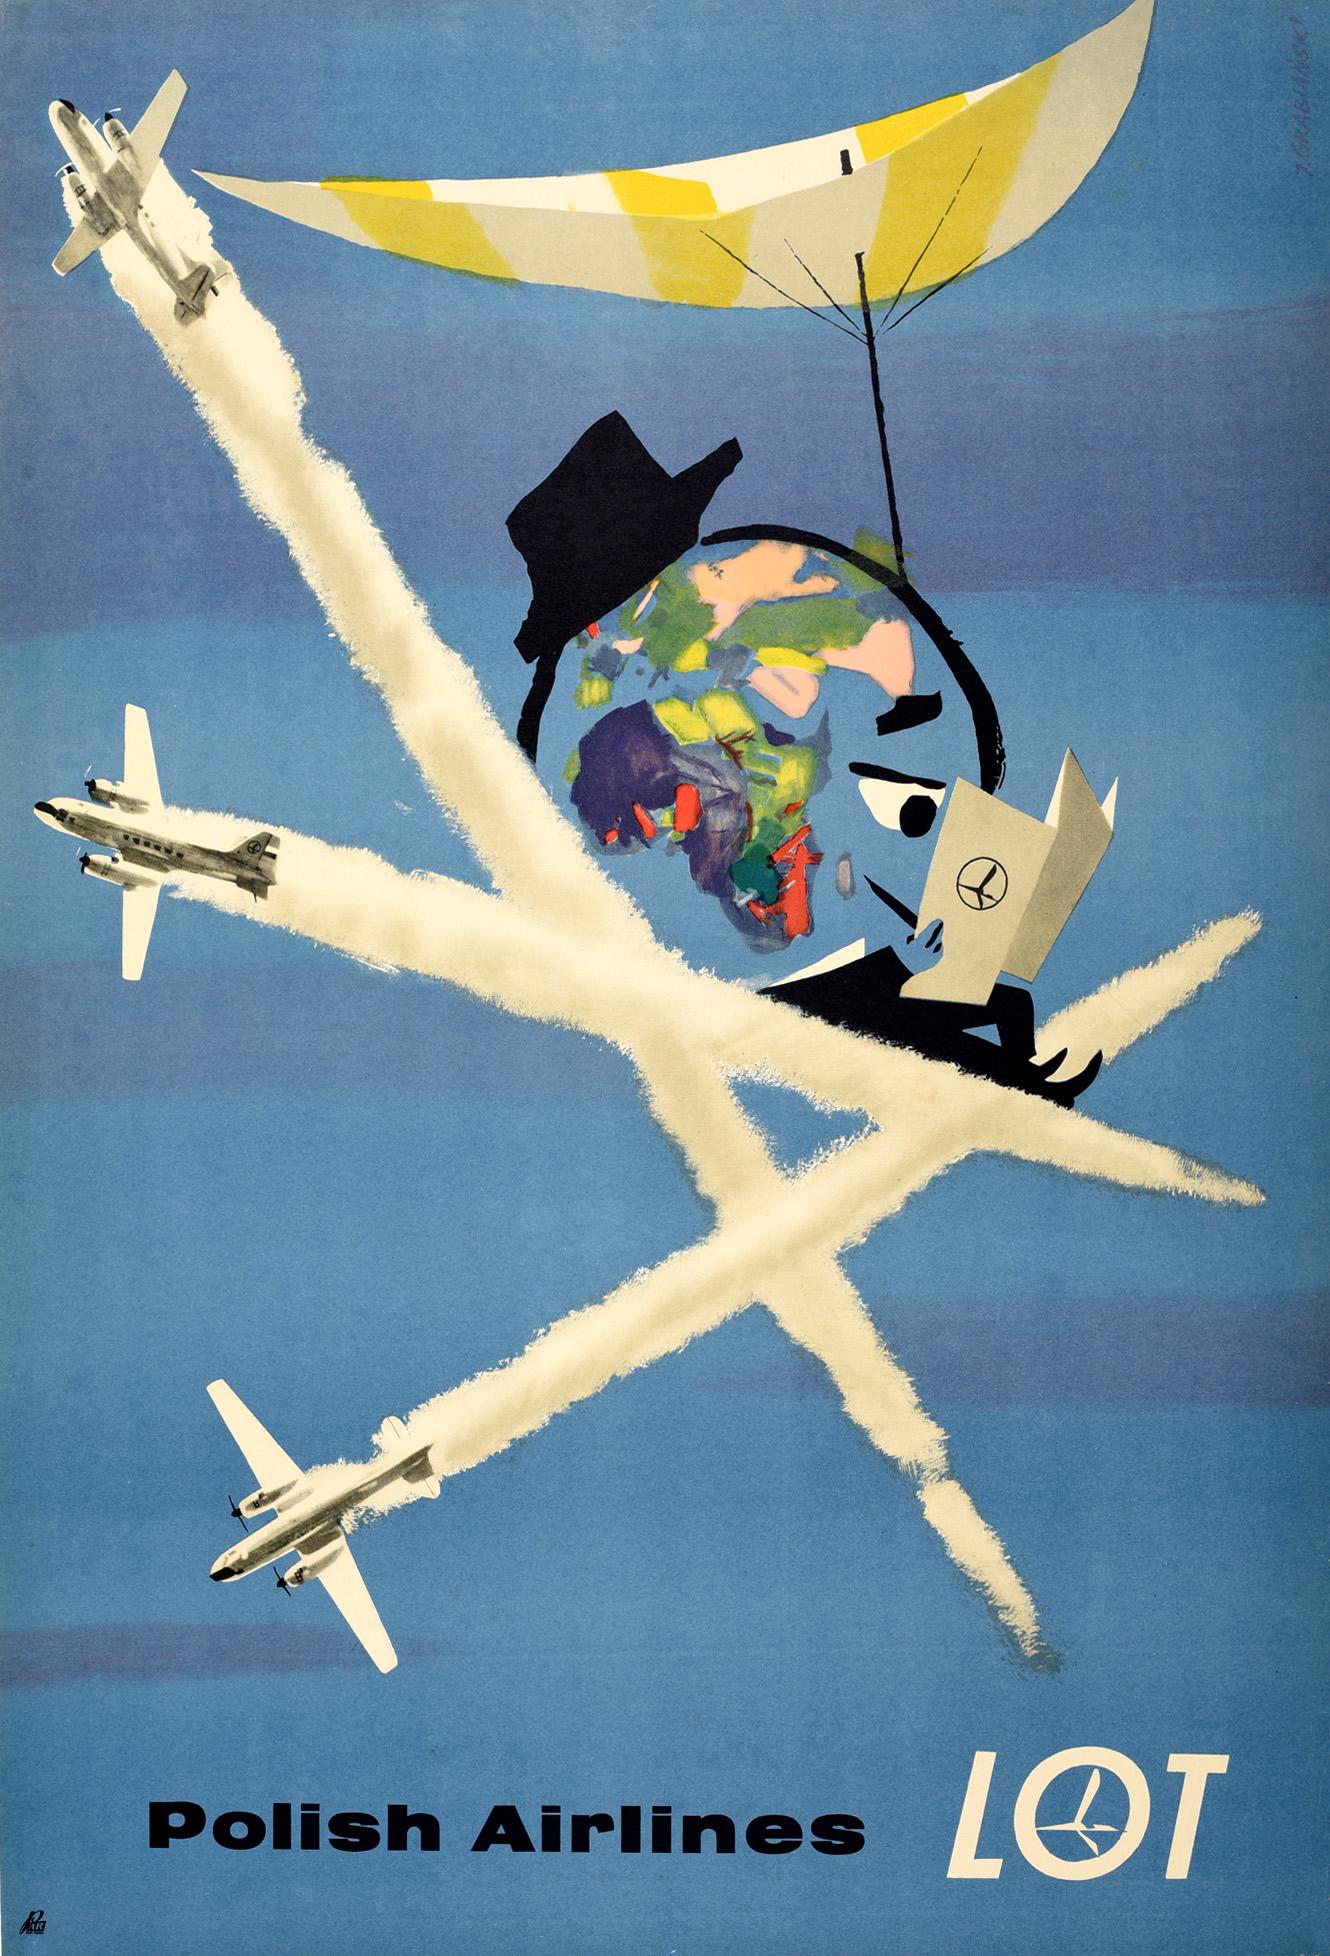 Janusz Grabianski Print - Original Vintage Poster For LOT Polish Airlines World Travel Planes Deck Chair